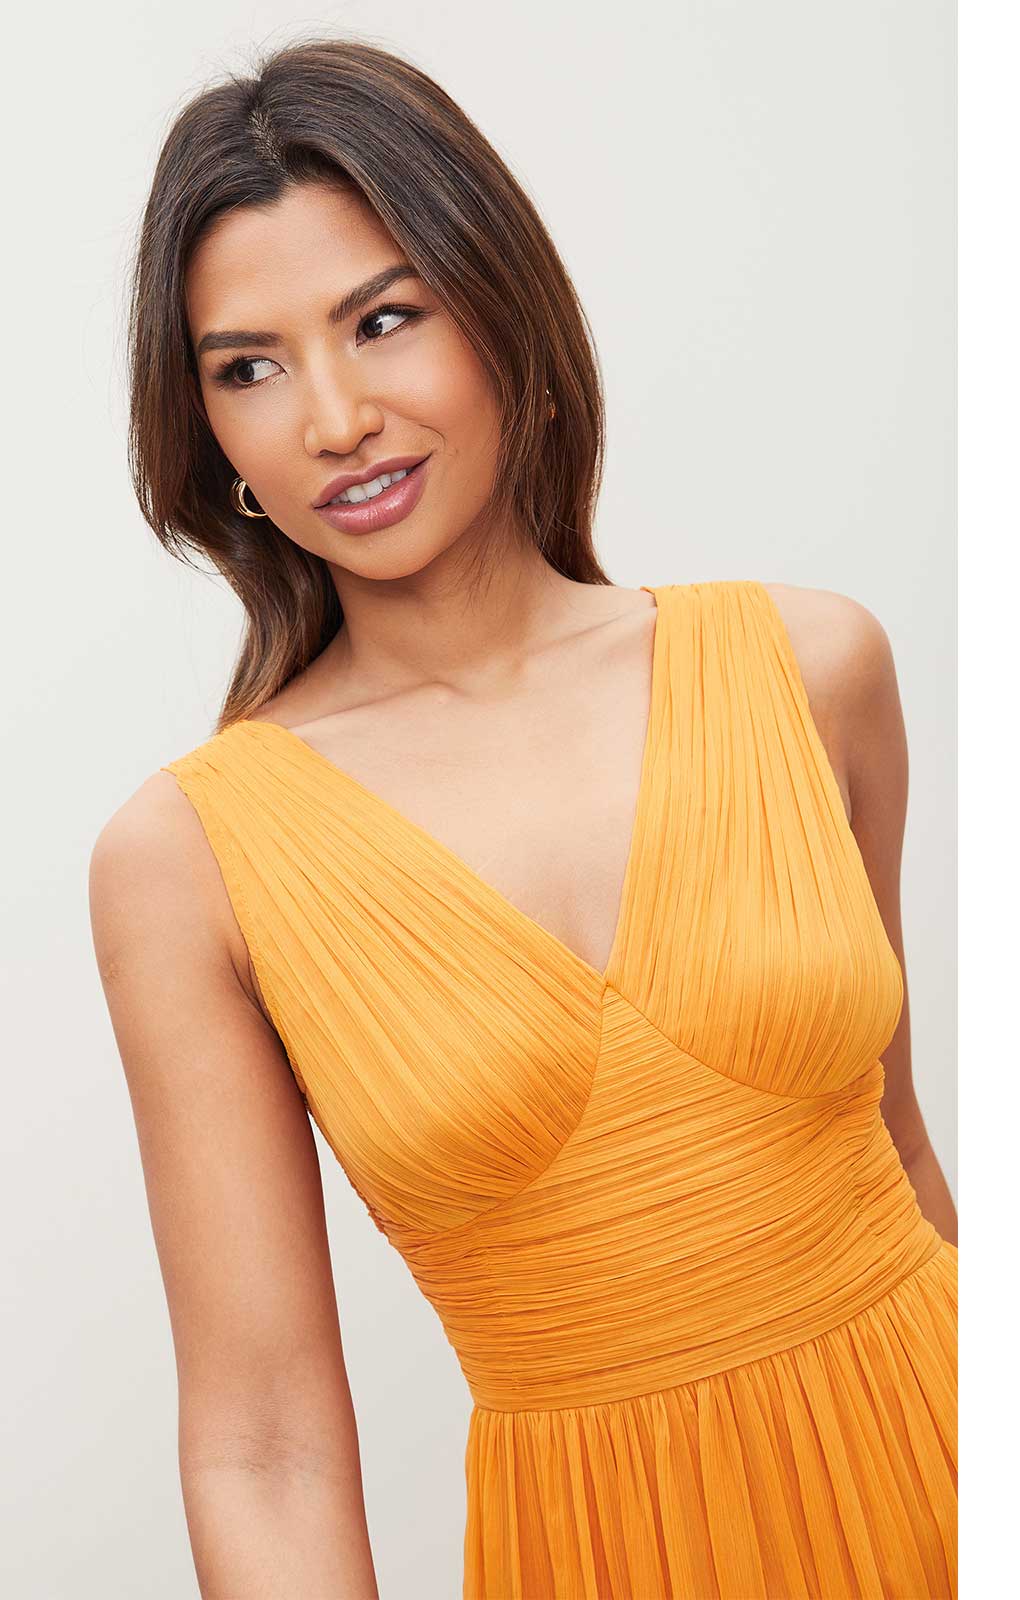 Lipsy Orange Empire Line Maxi Dress product image